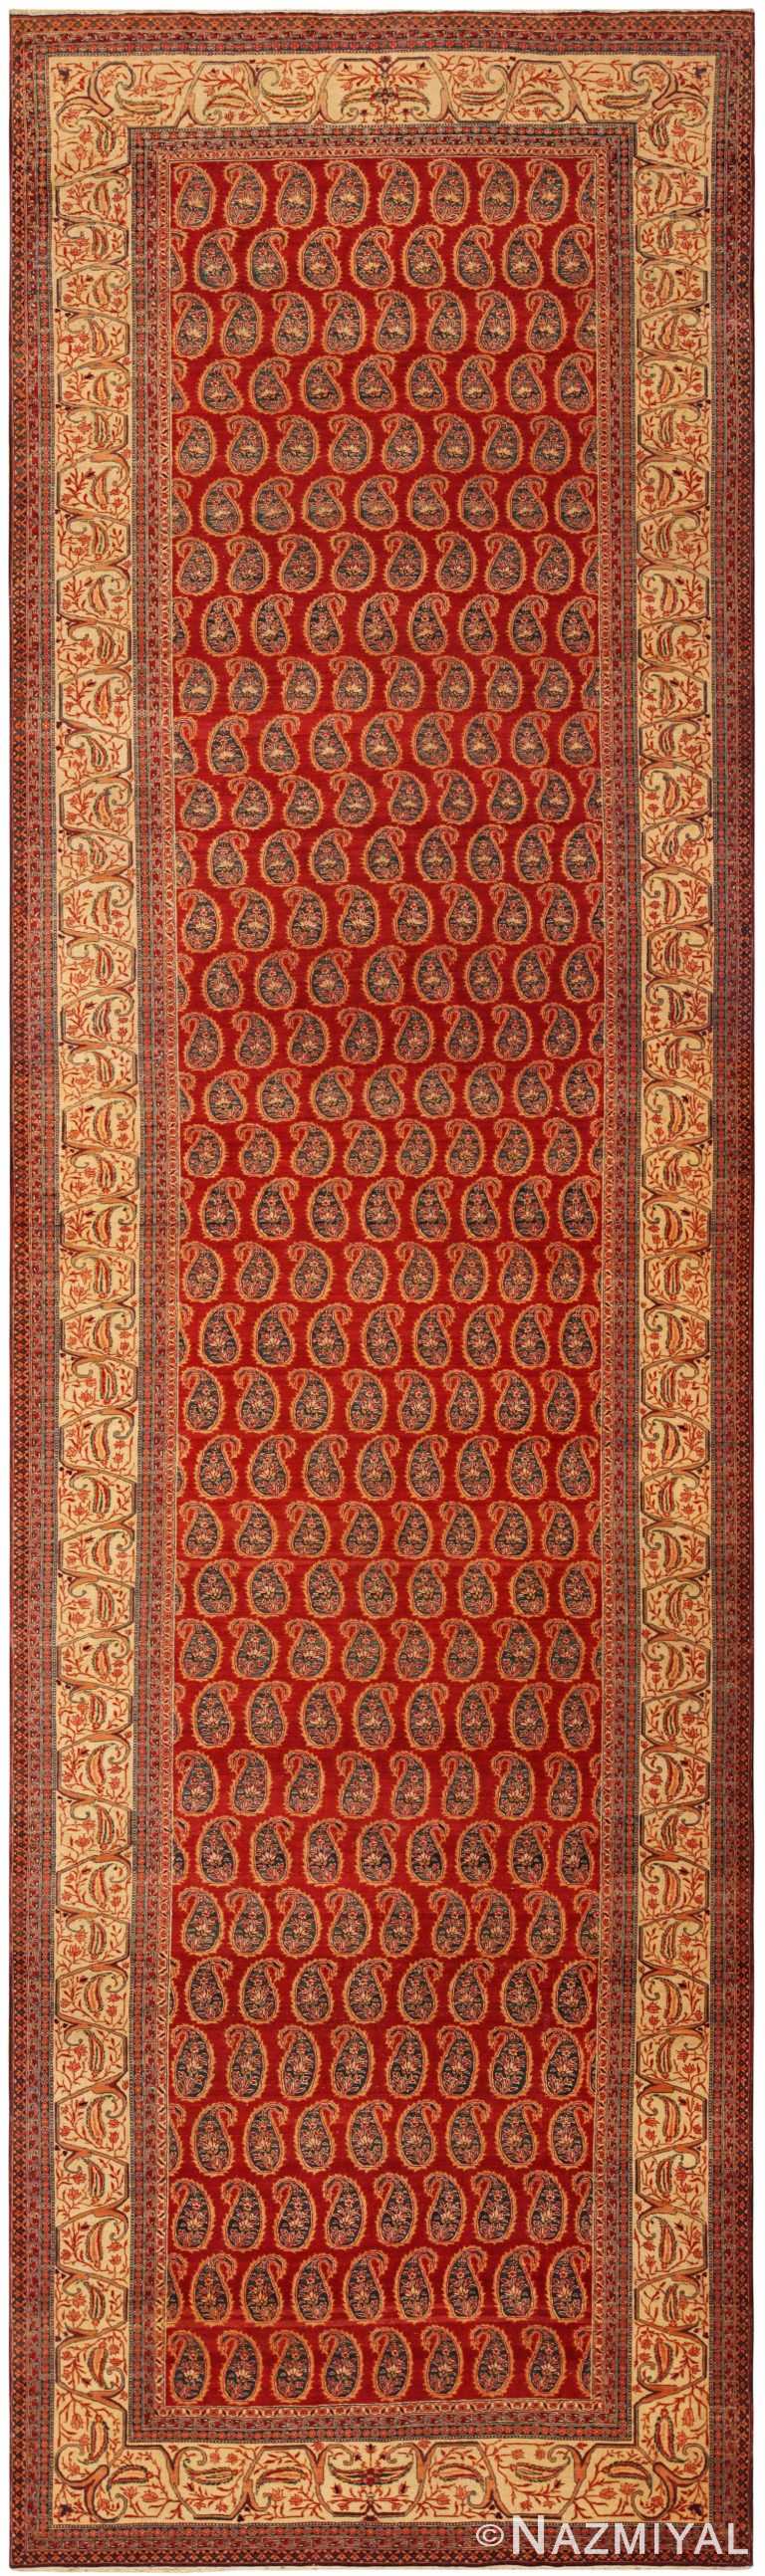 Antique Persian Tabriz Runner Rug 71372 by Nazmiyal Antique Rugs